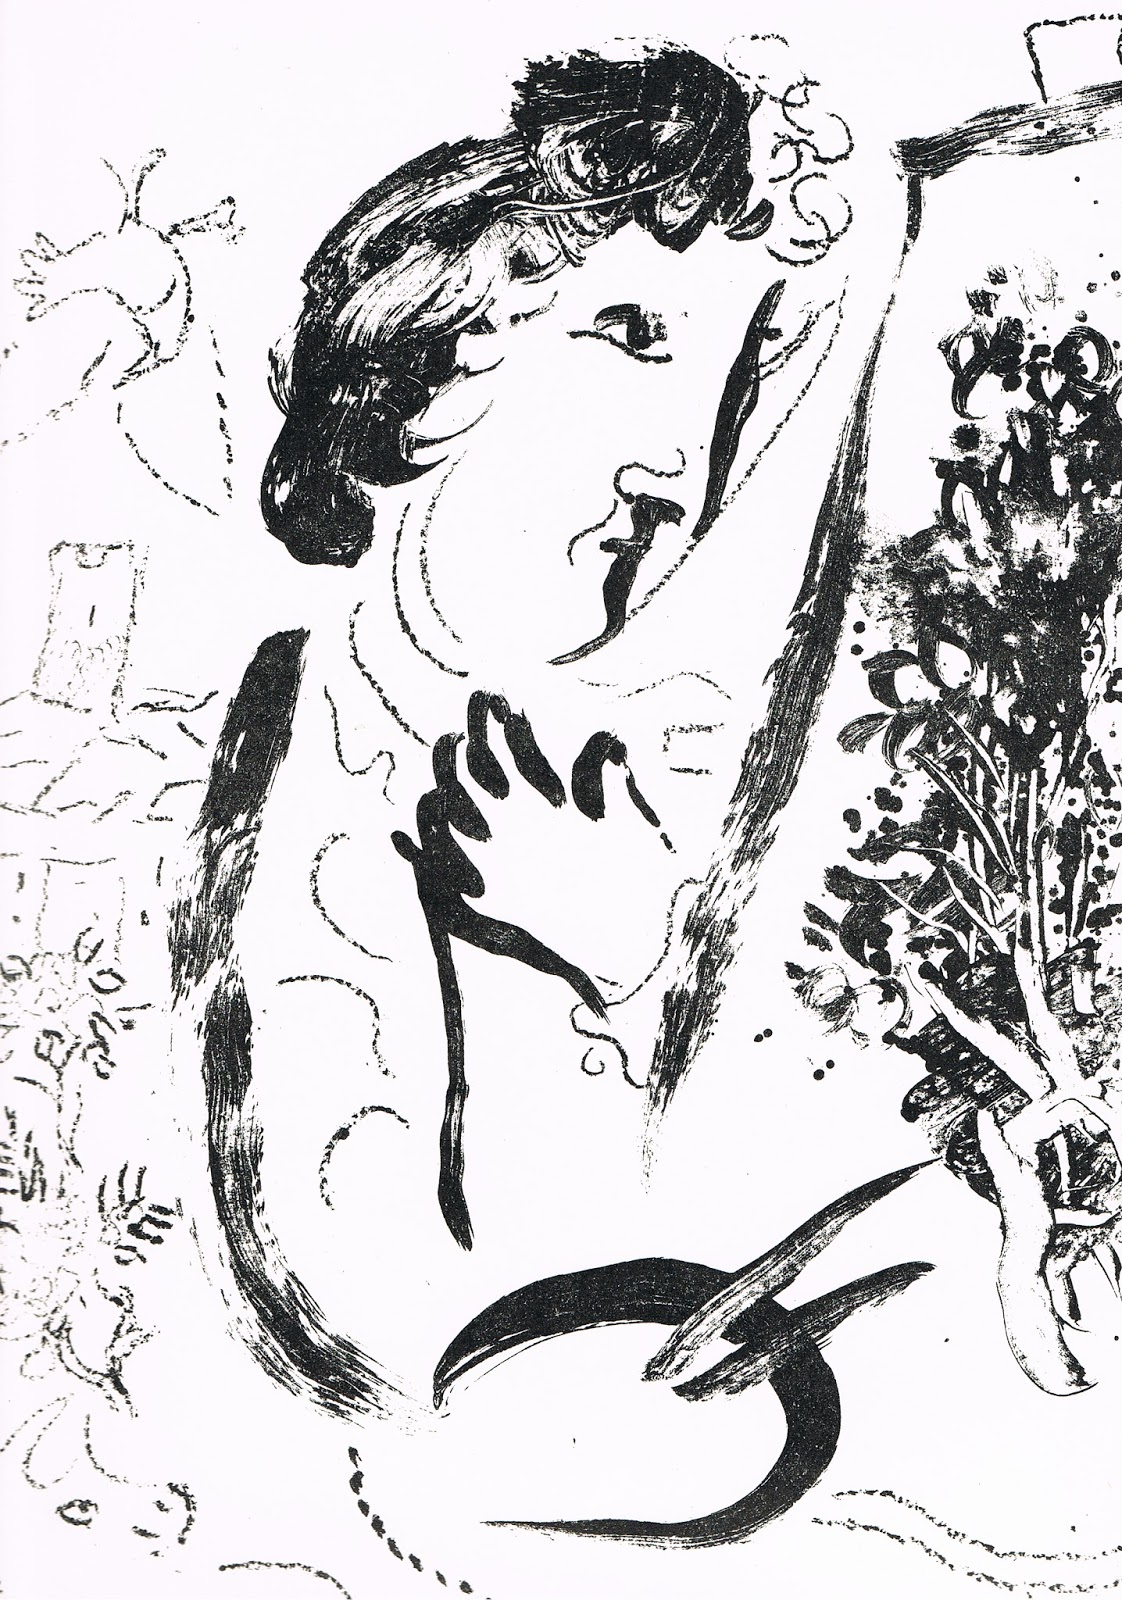 Image result for chagall devant tableau mourlot 402